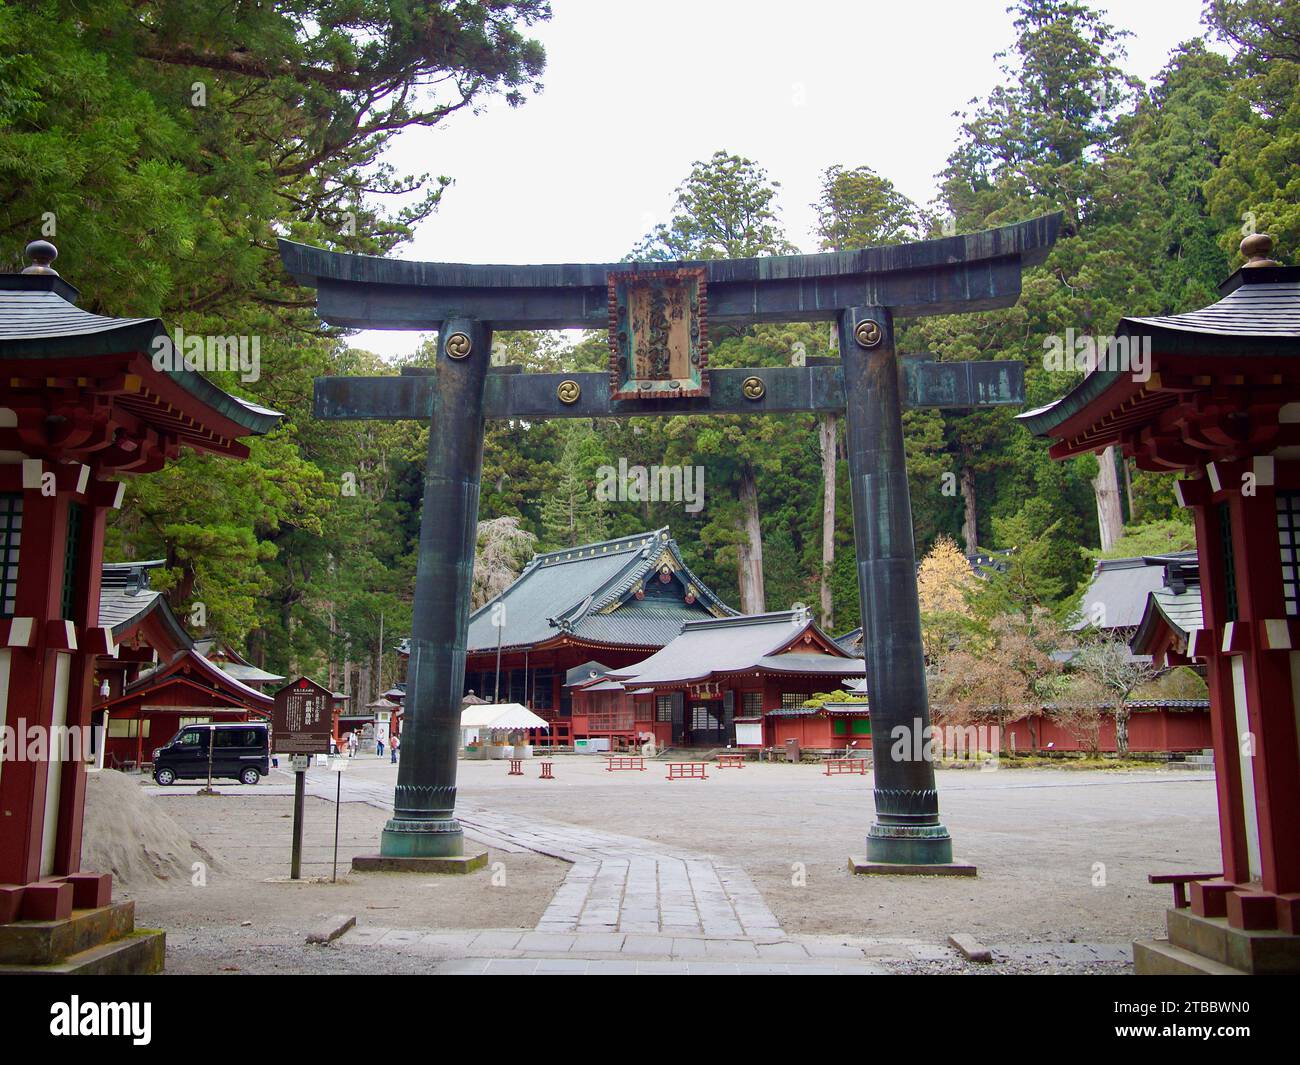 The front torii gate of the Futarasan Jinja shrine in Nikko, Japan. This shrine was founded in 767 by Shodo Shonin. Stock Photo